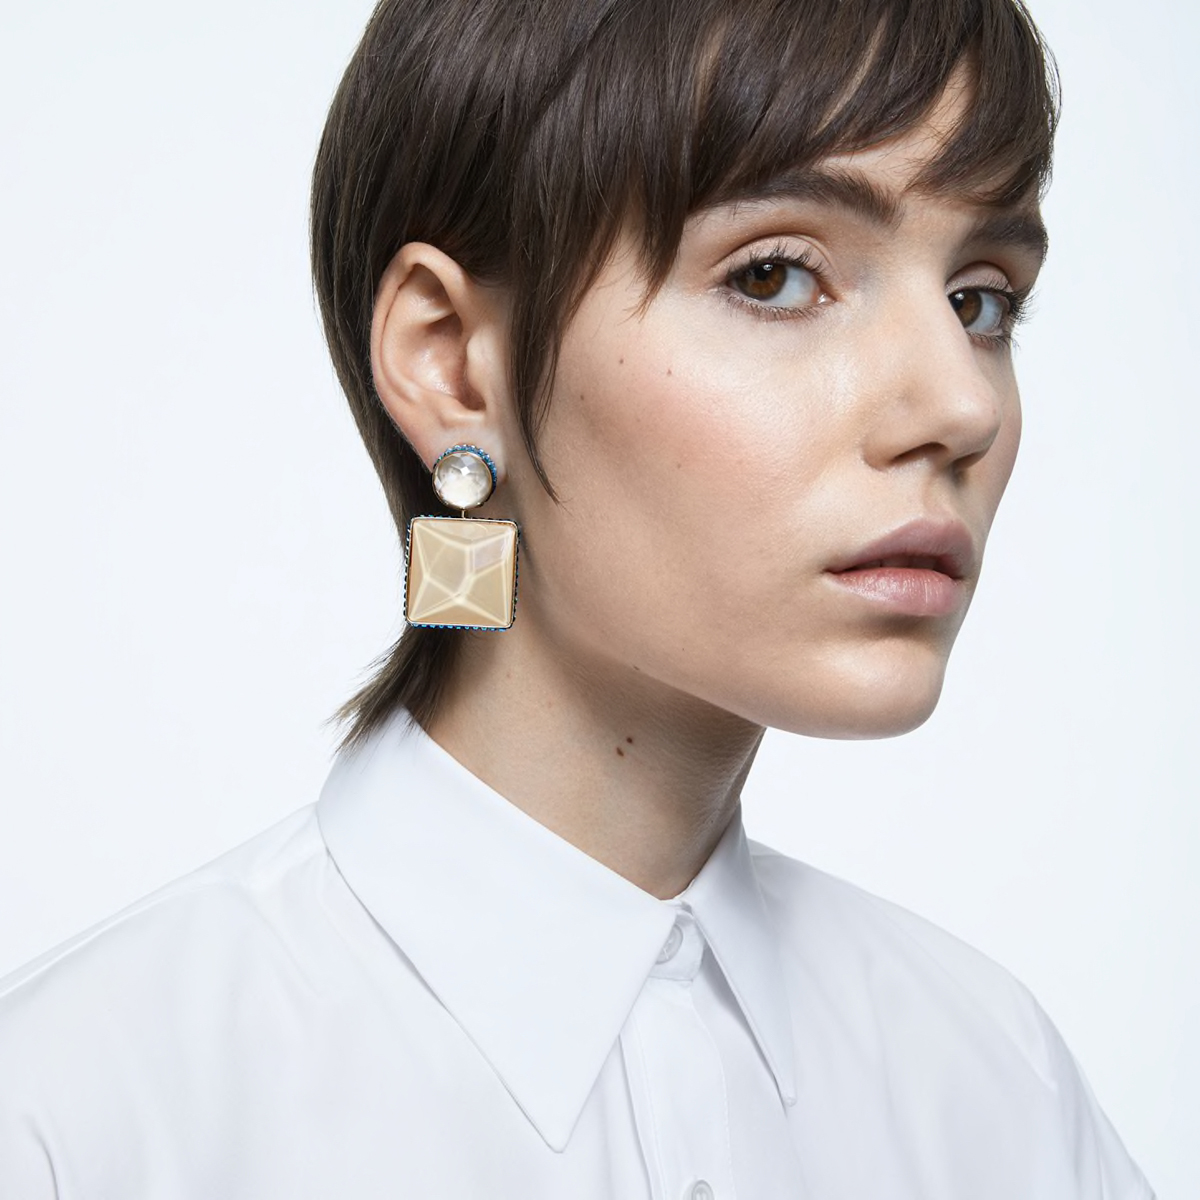 Swarovski Orbita Earrings, Asymmetrical, Square Cut Crystal, Multicolored, Gold-Tone Plated, Set